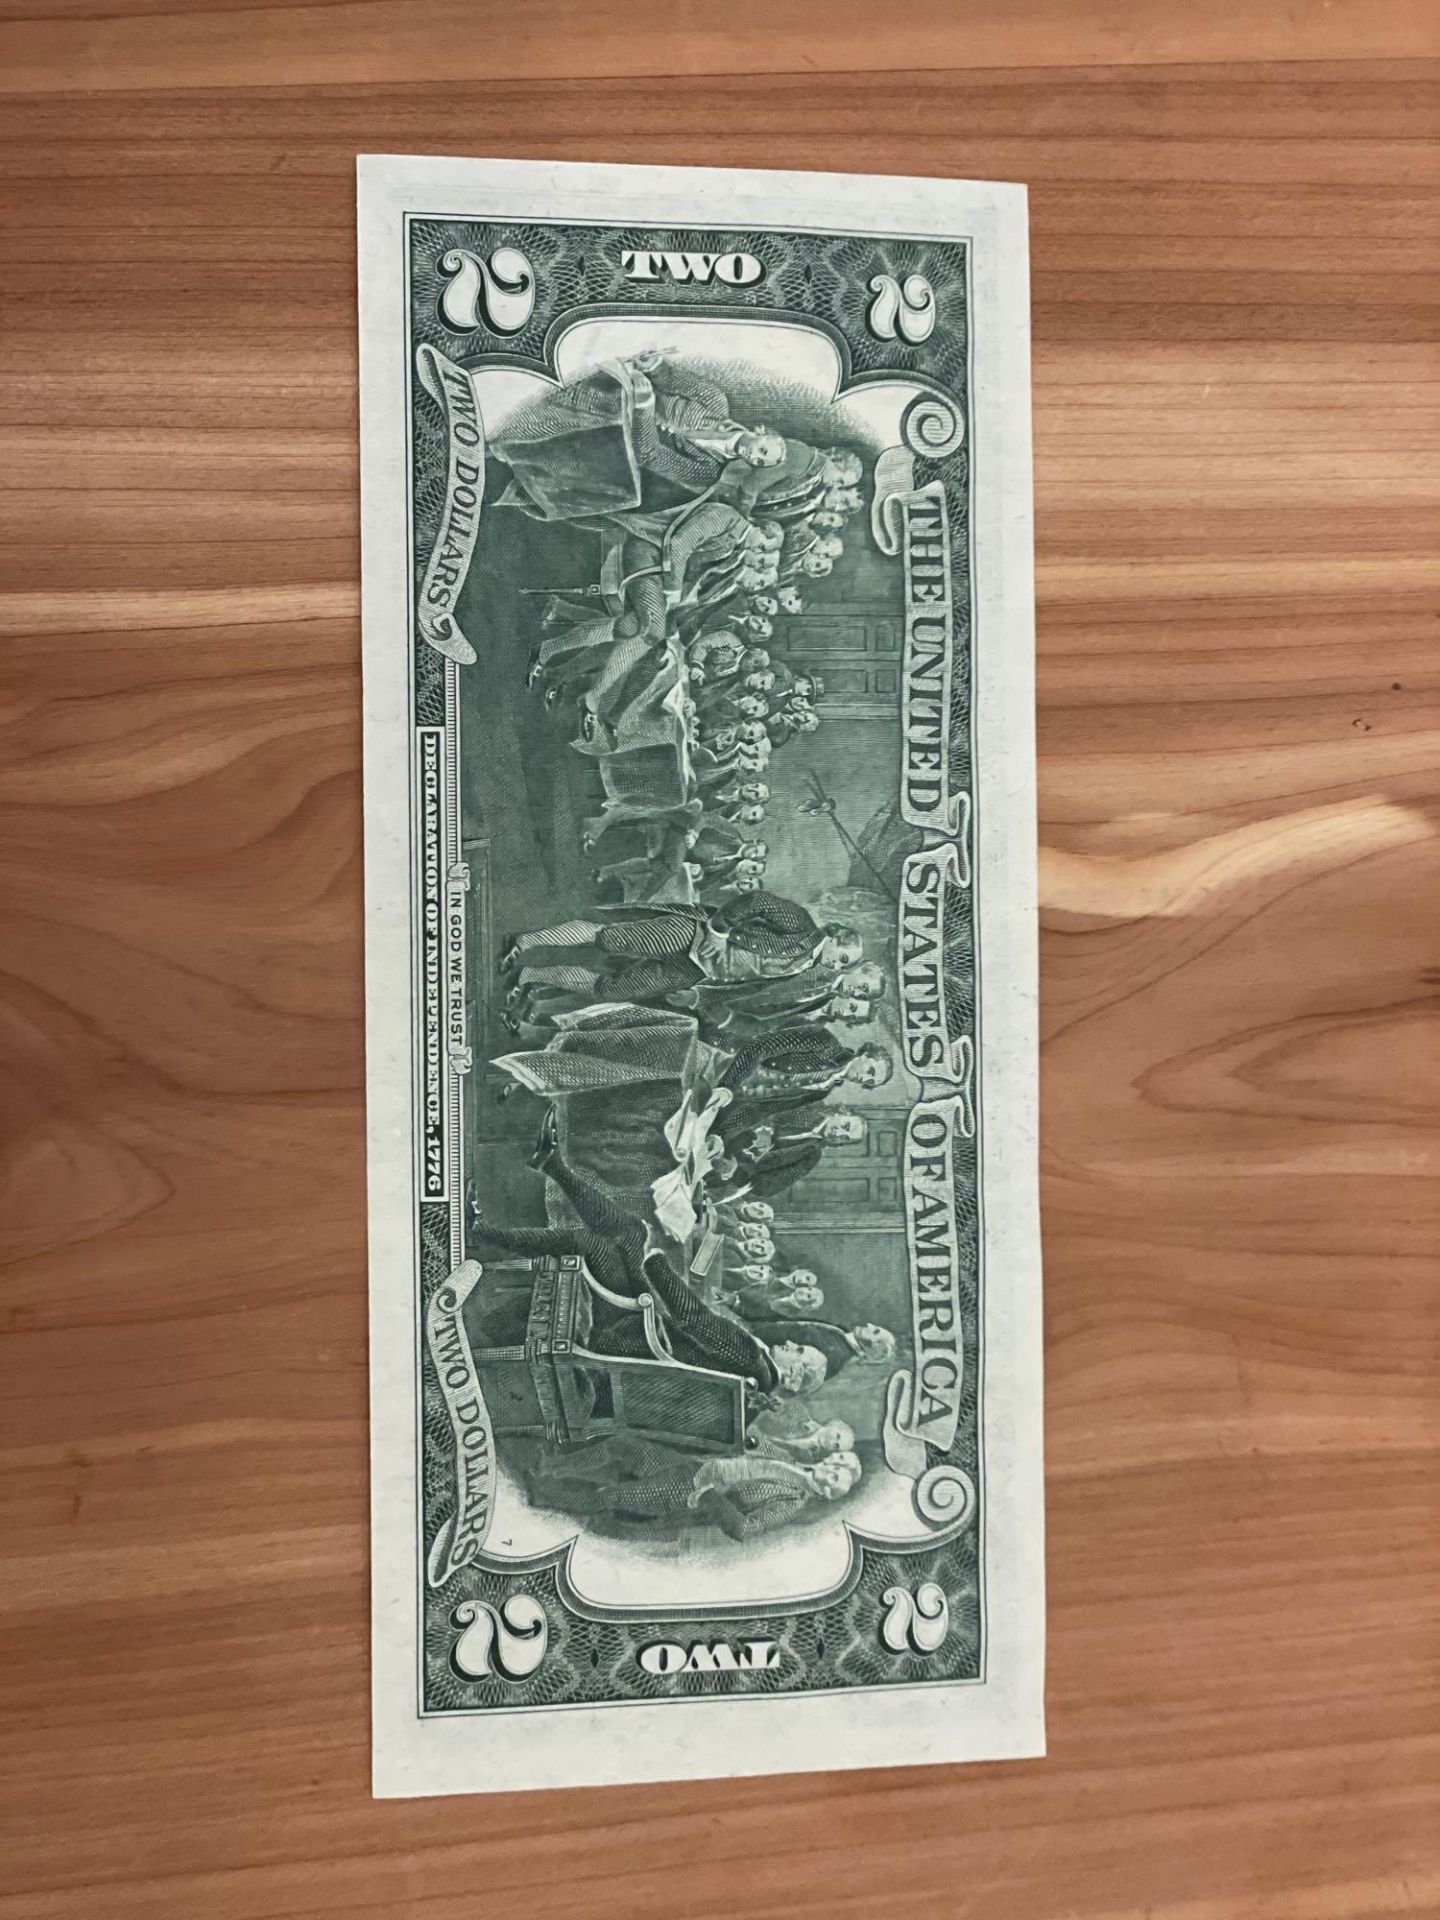 Consecutive $2 notes - Image 5 of 5